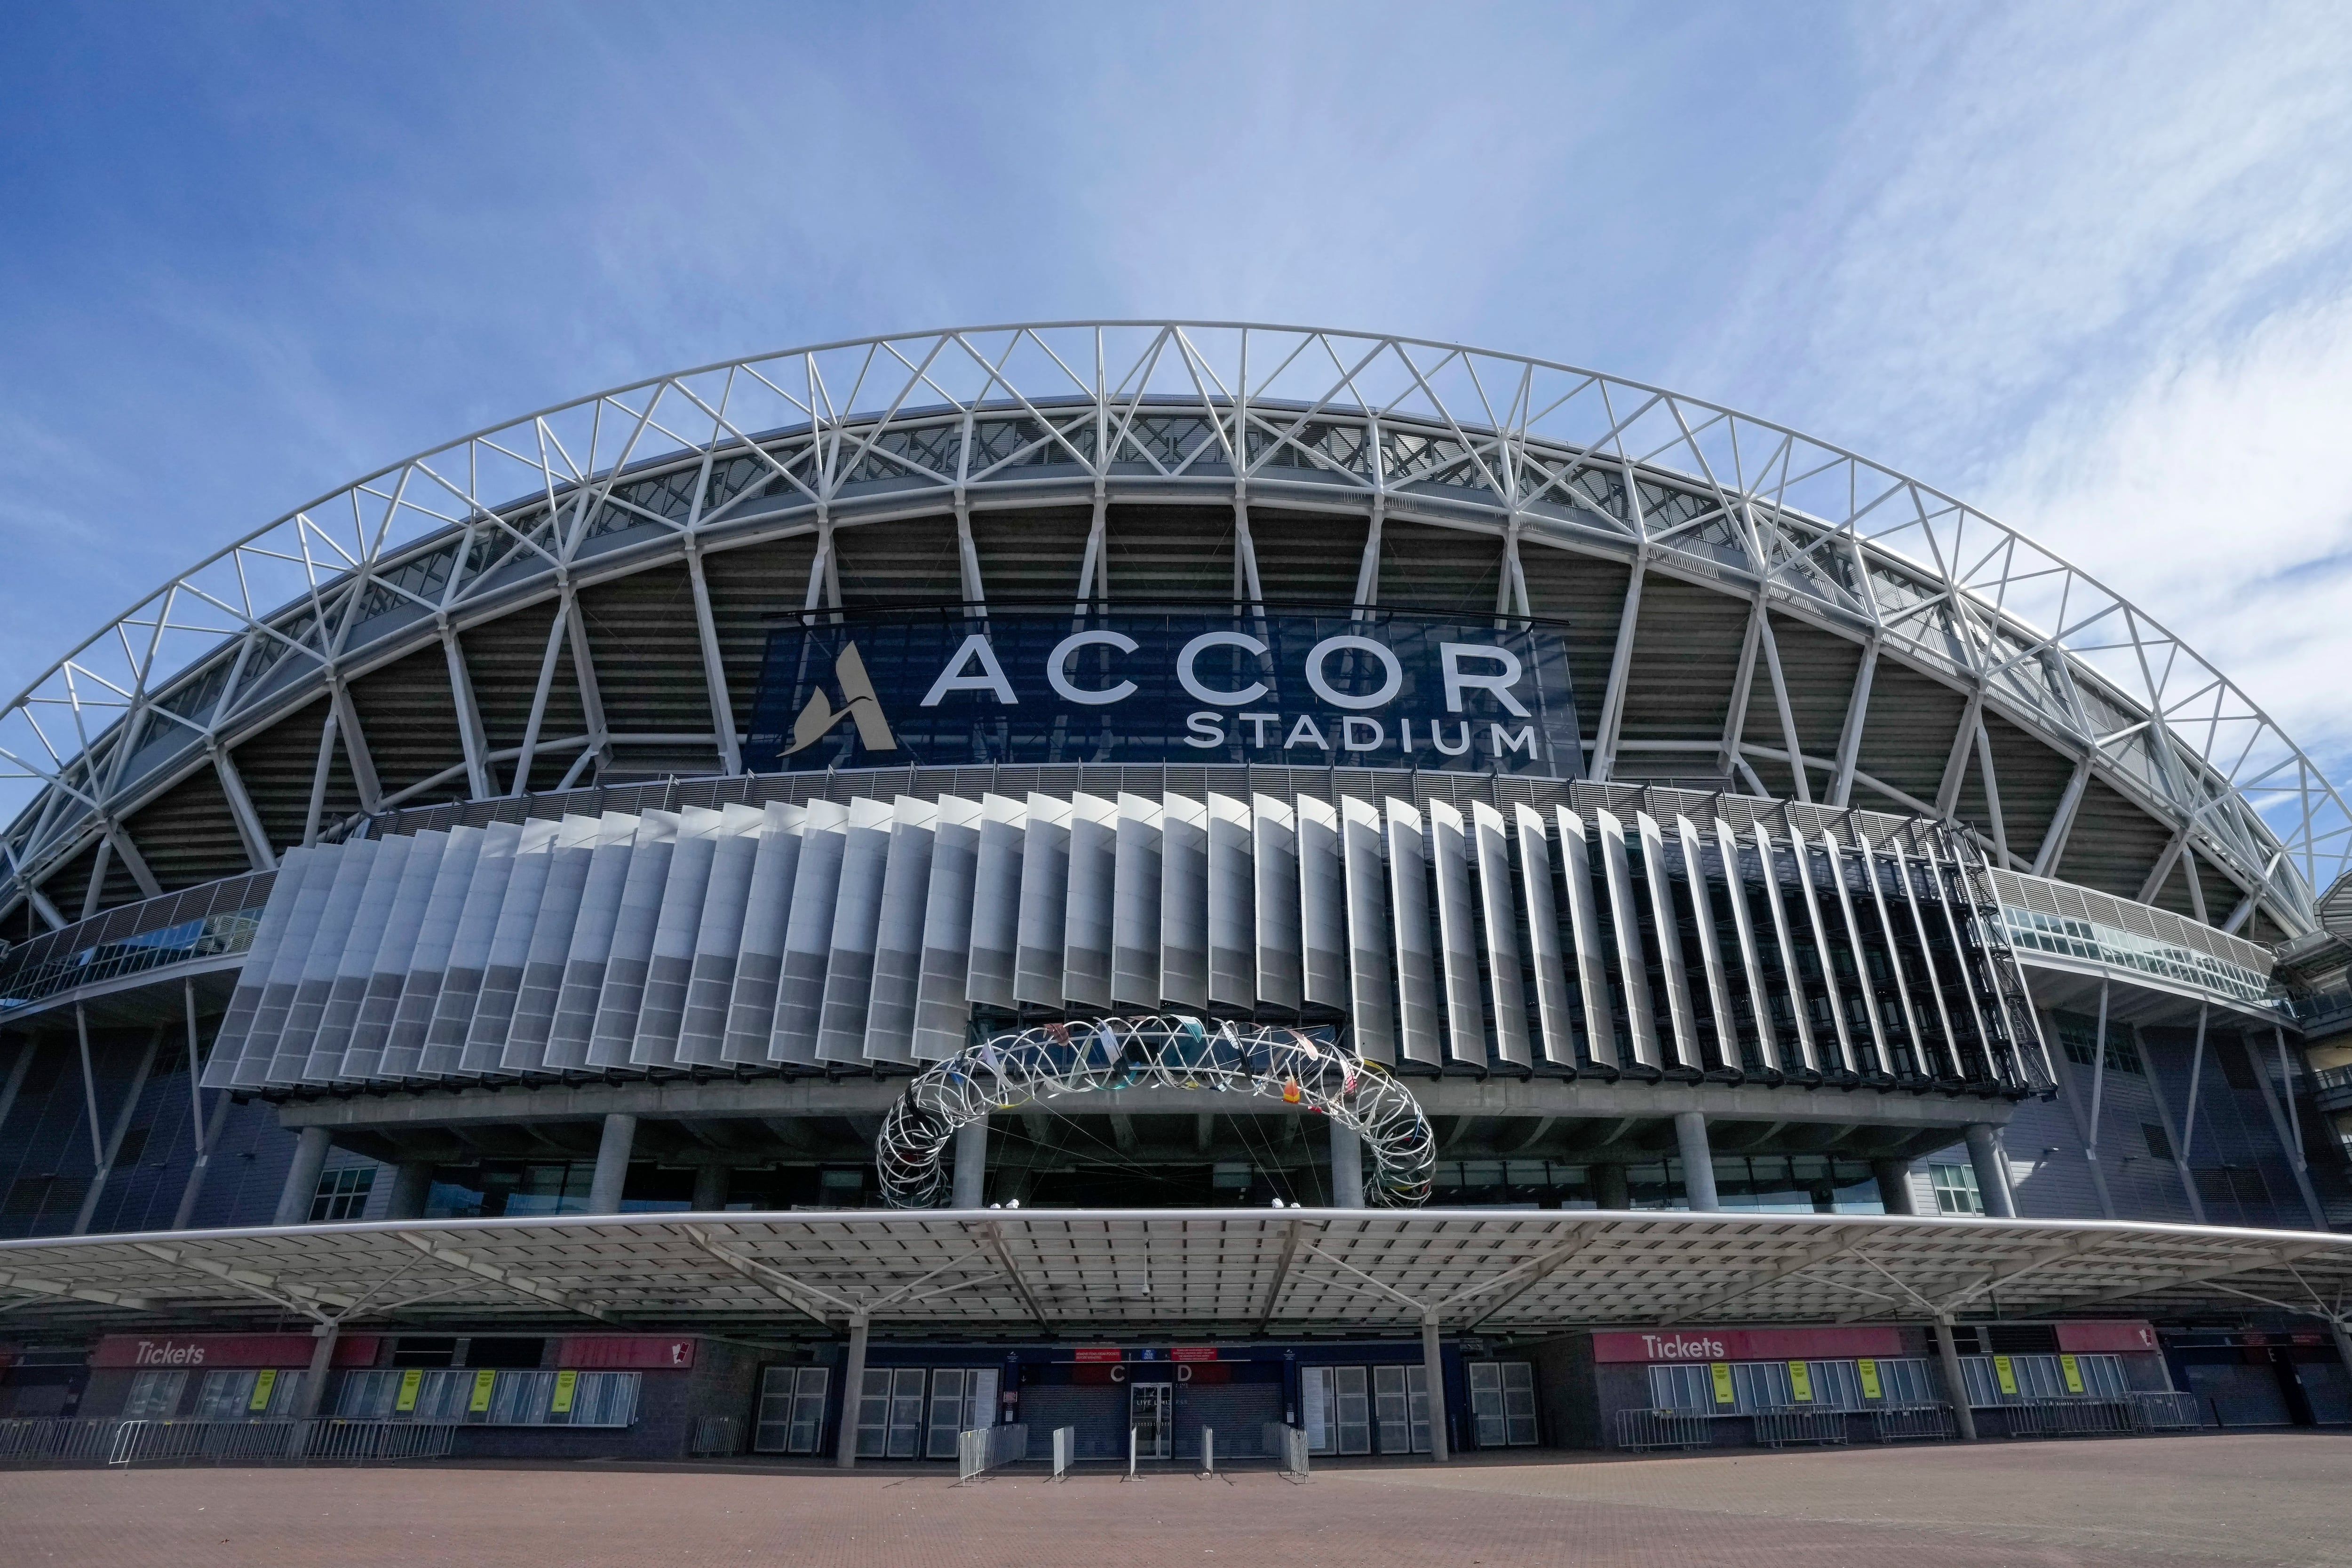 Accor Stadium in Sydney, Australia will host this year's women's World Cup final. 